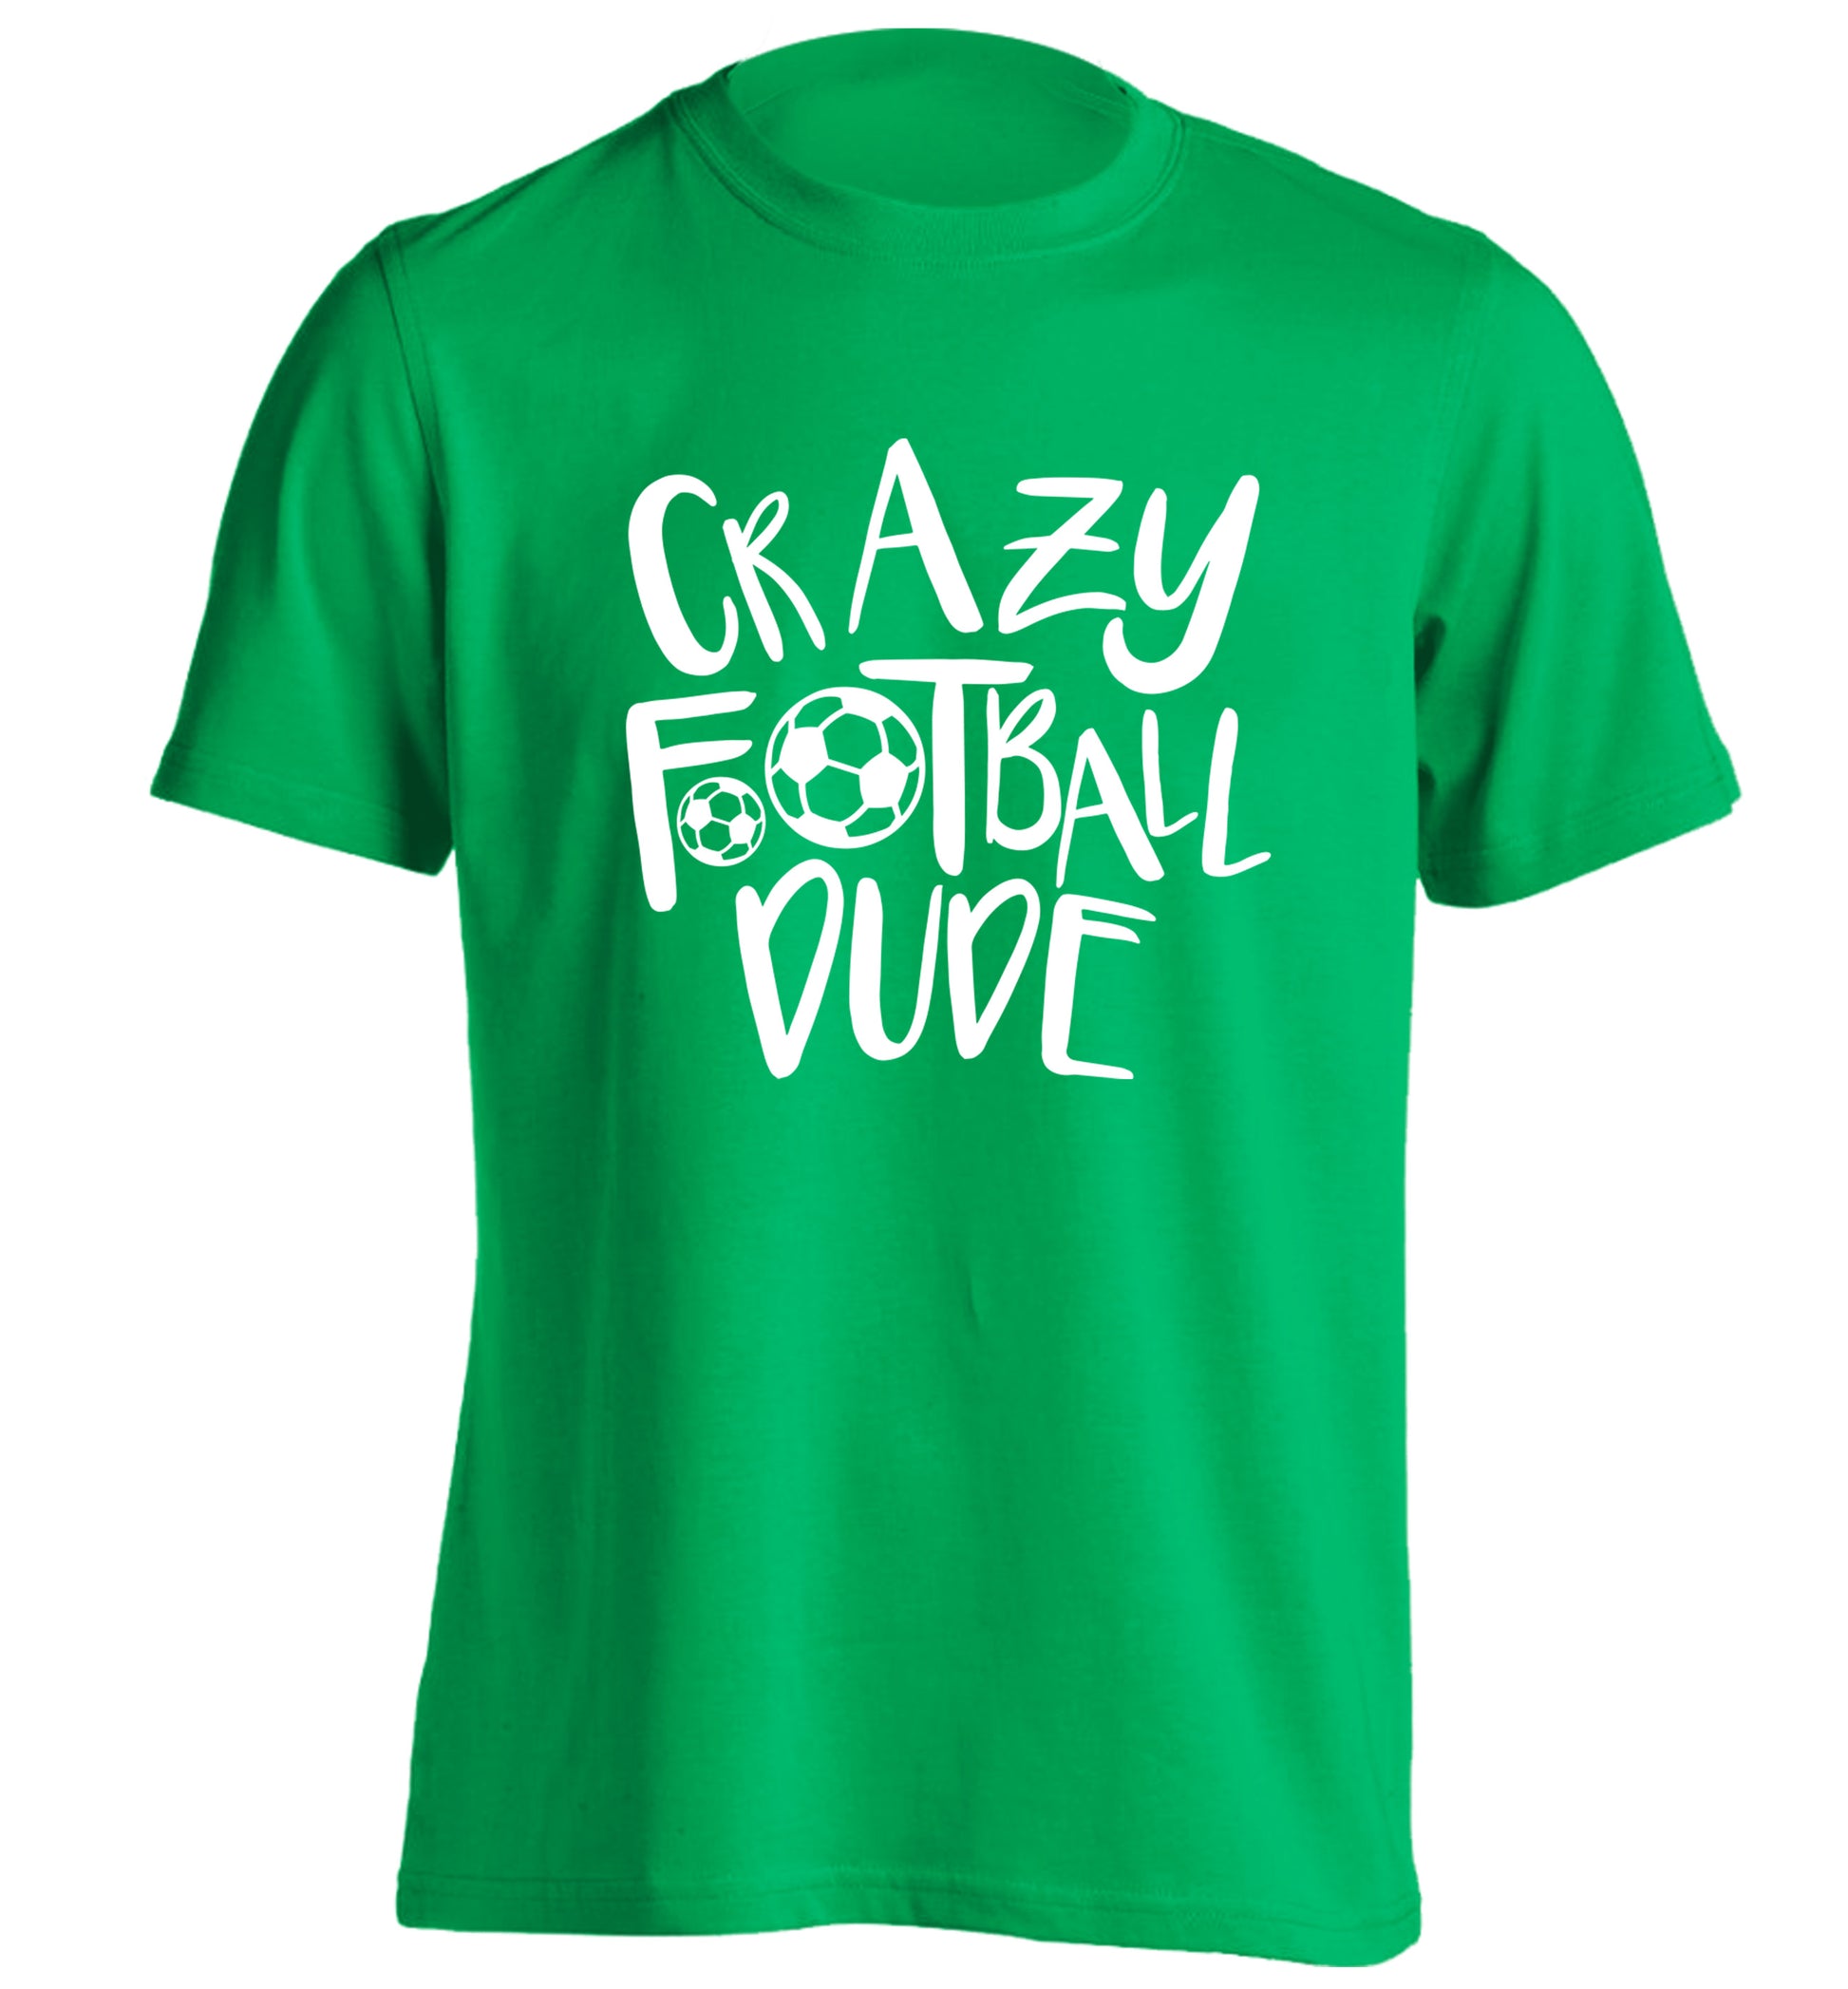 Crazy football dude adults unisexgreen Tshirt 2XL